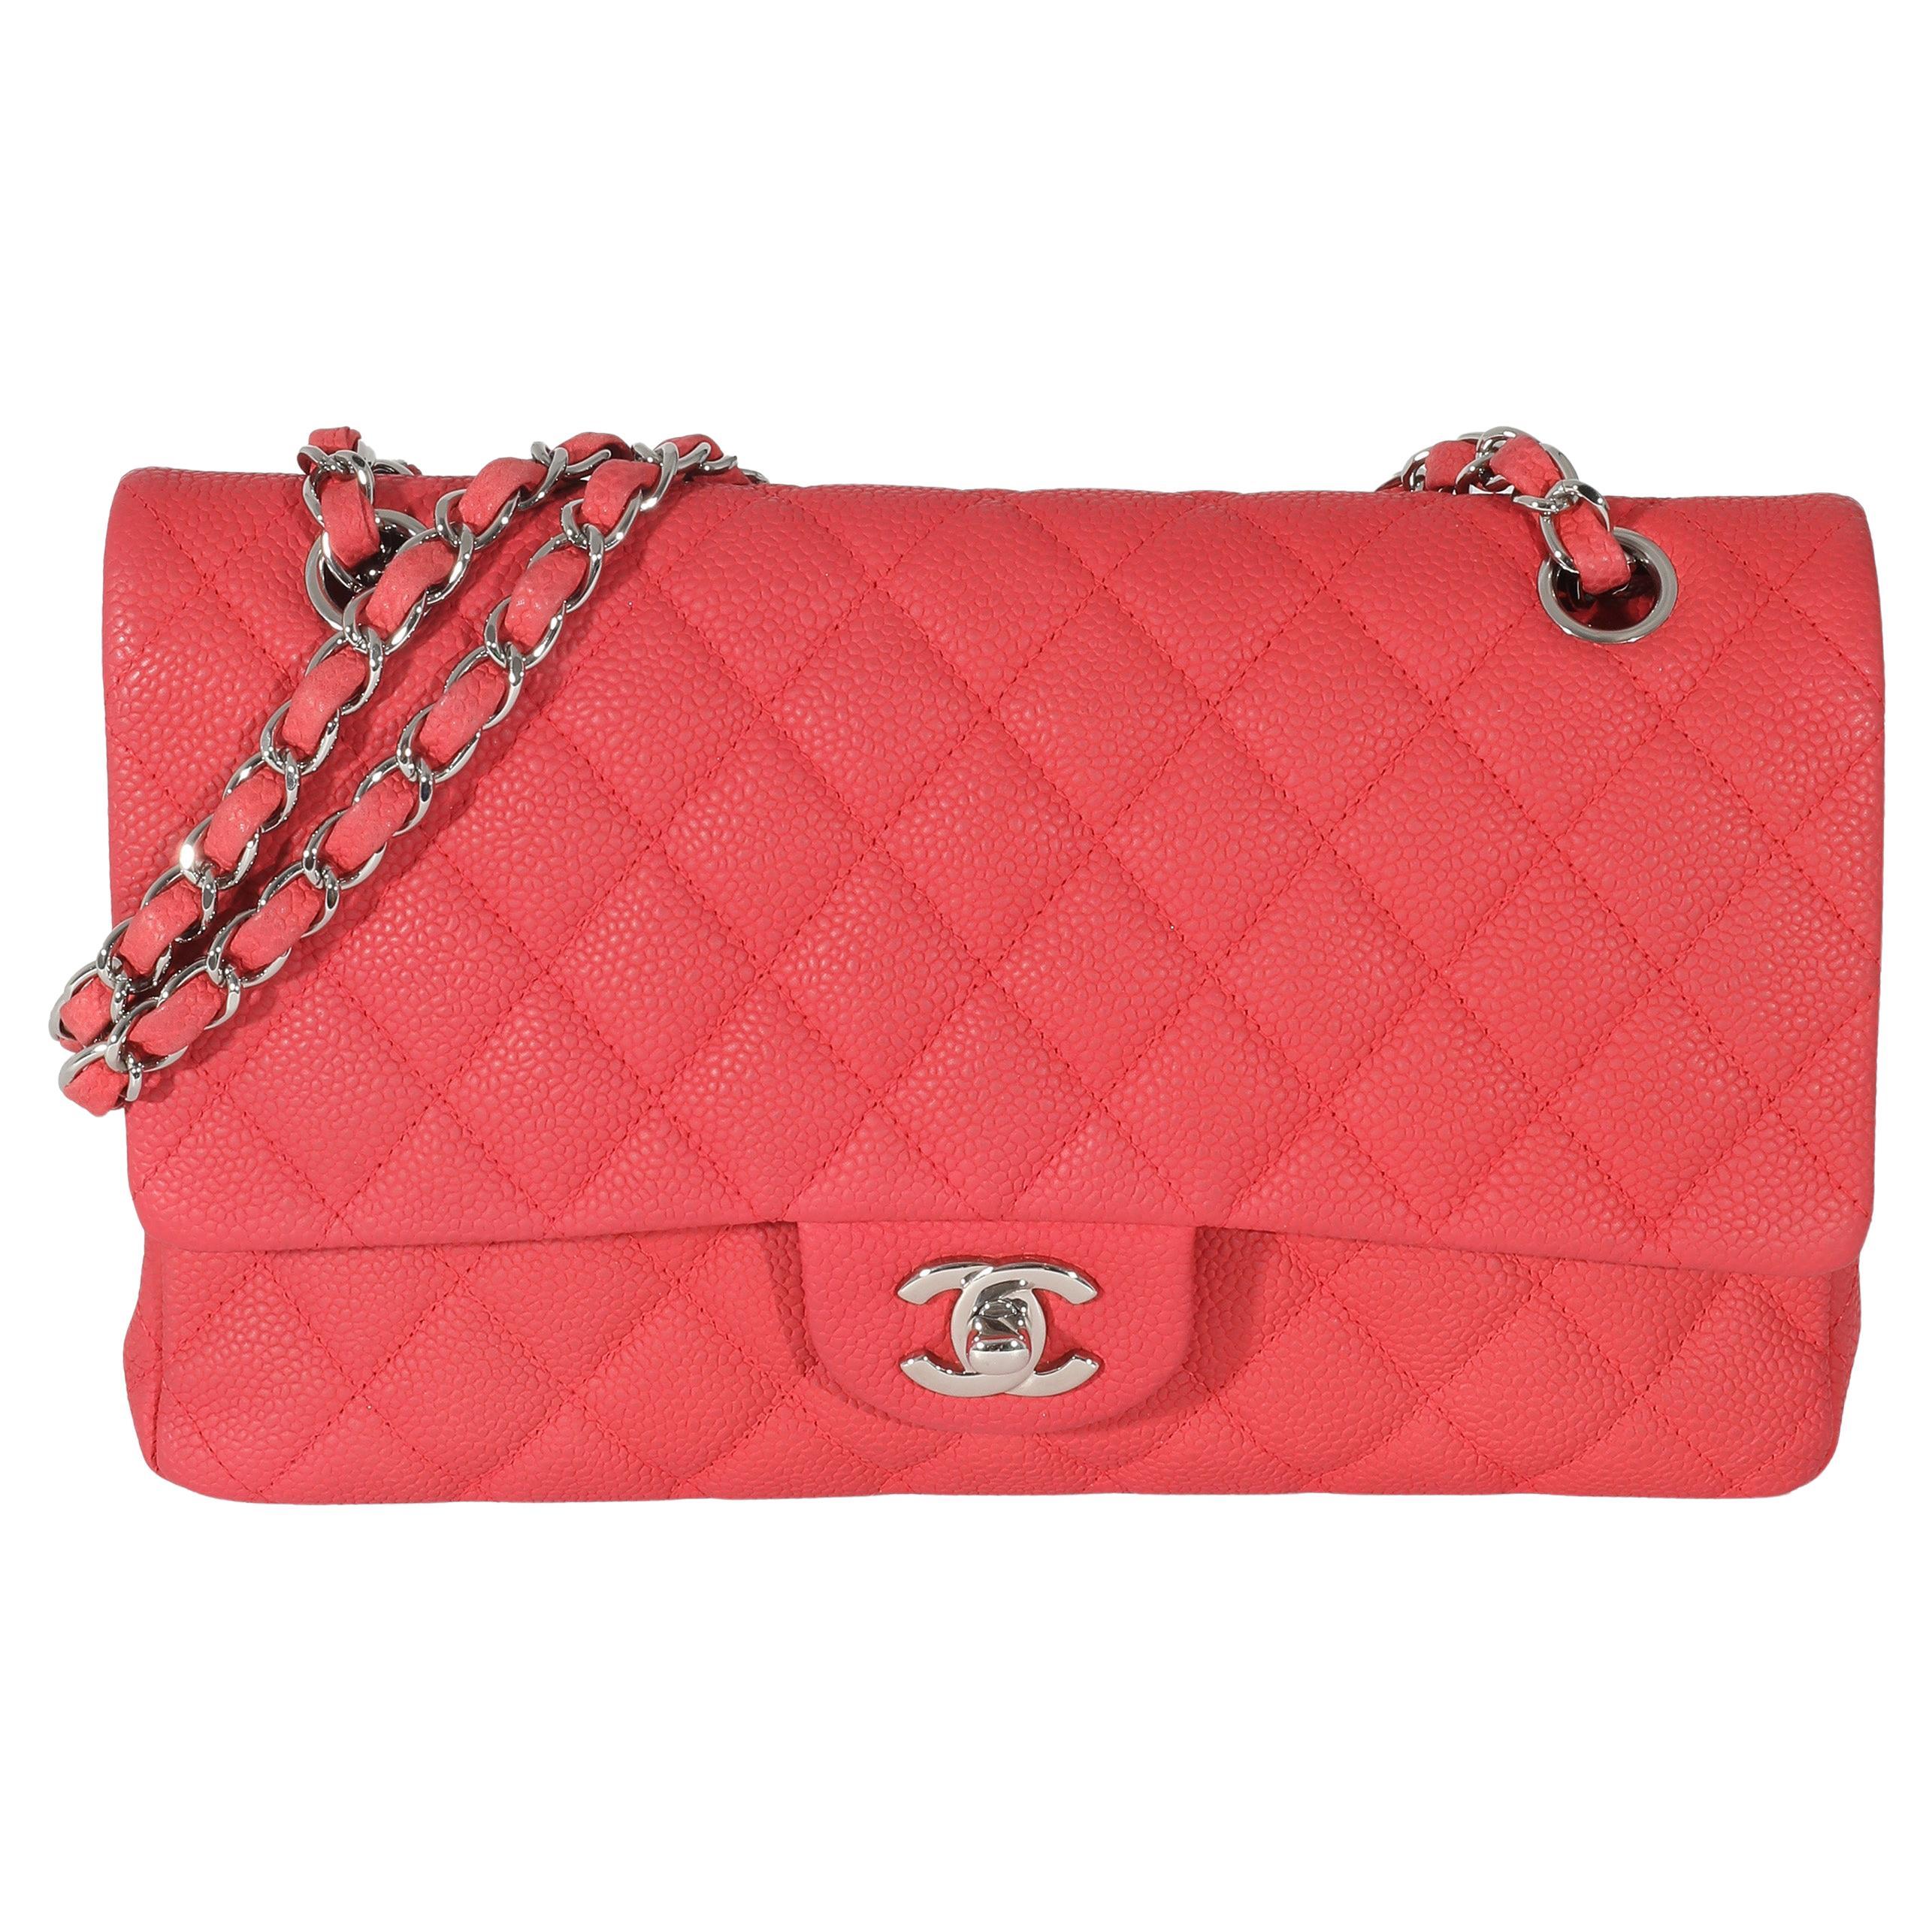 Chanel Red Matte Caviar Medium Double Flap Bag